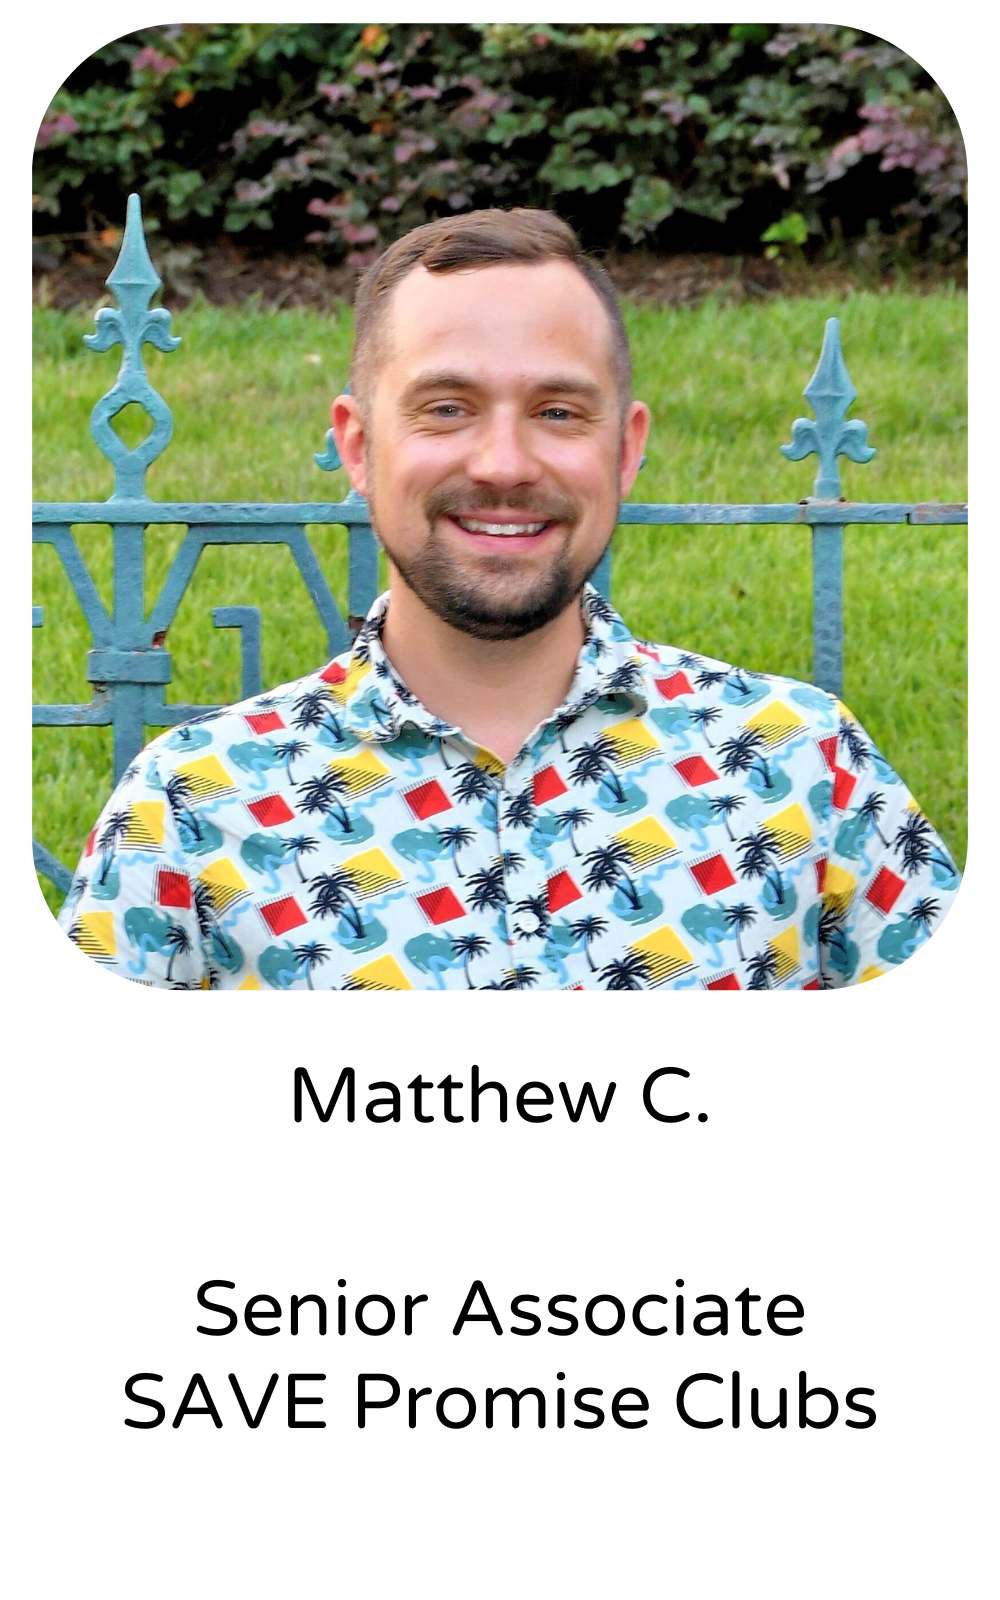 Matthew C., Senior Associate, SAVE Promise Clubs